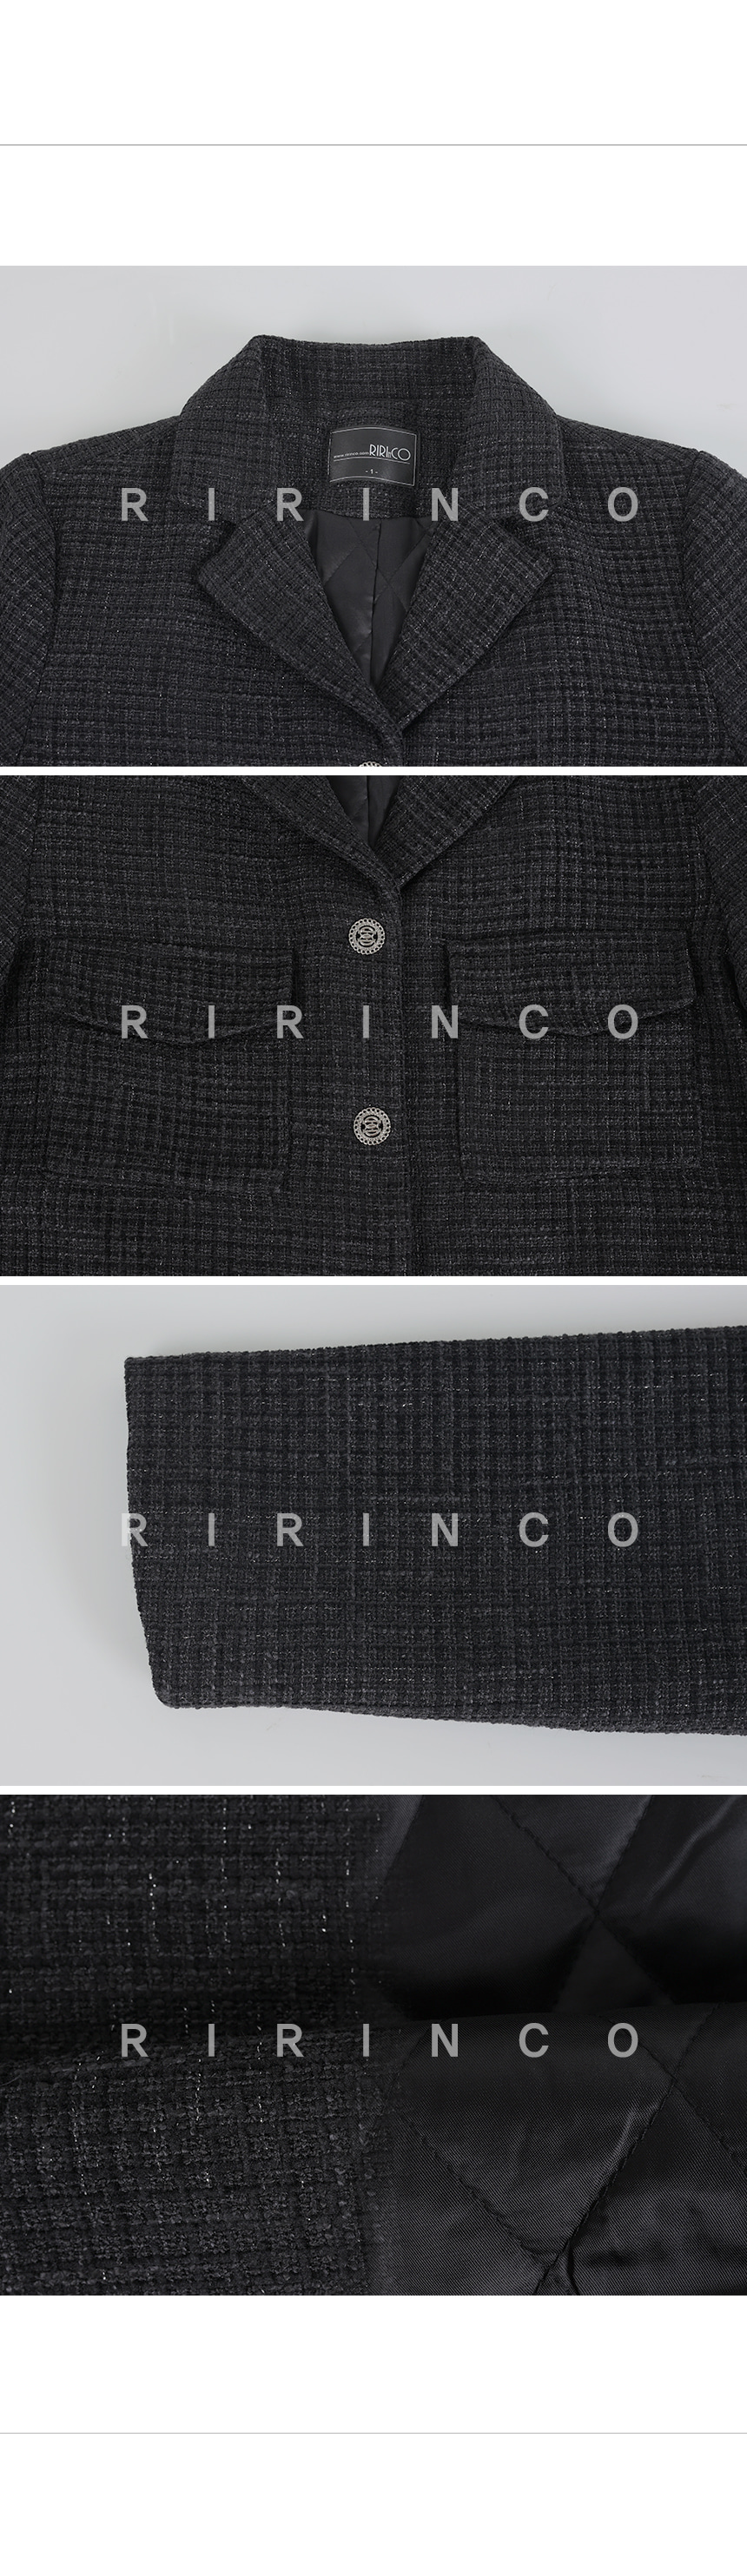 RIRINCO ツイードポケットセミクロップドジャケット(キルティング裏地) 